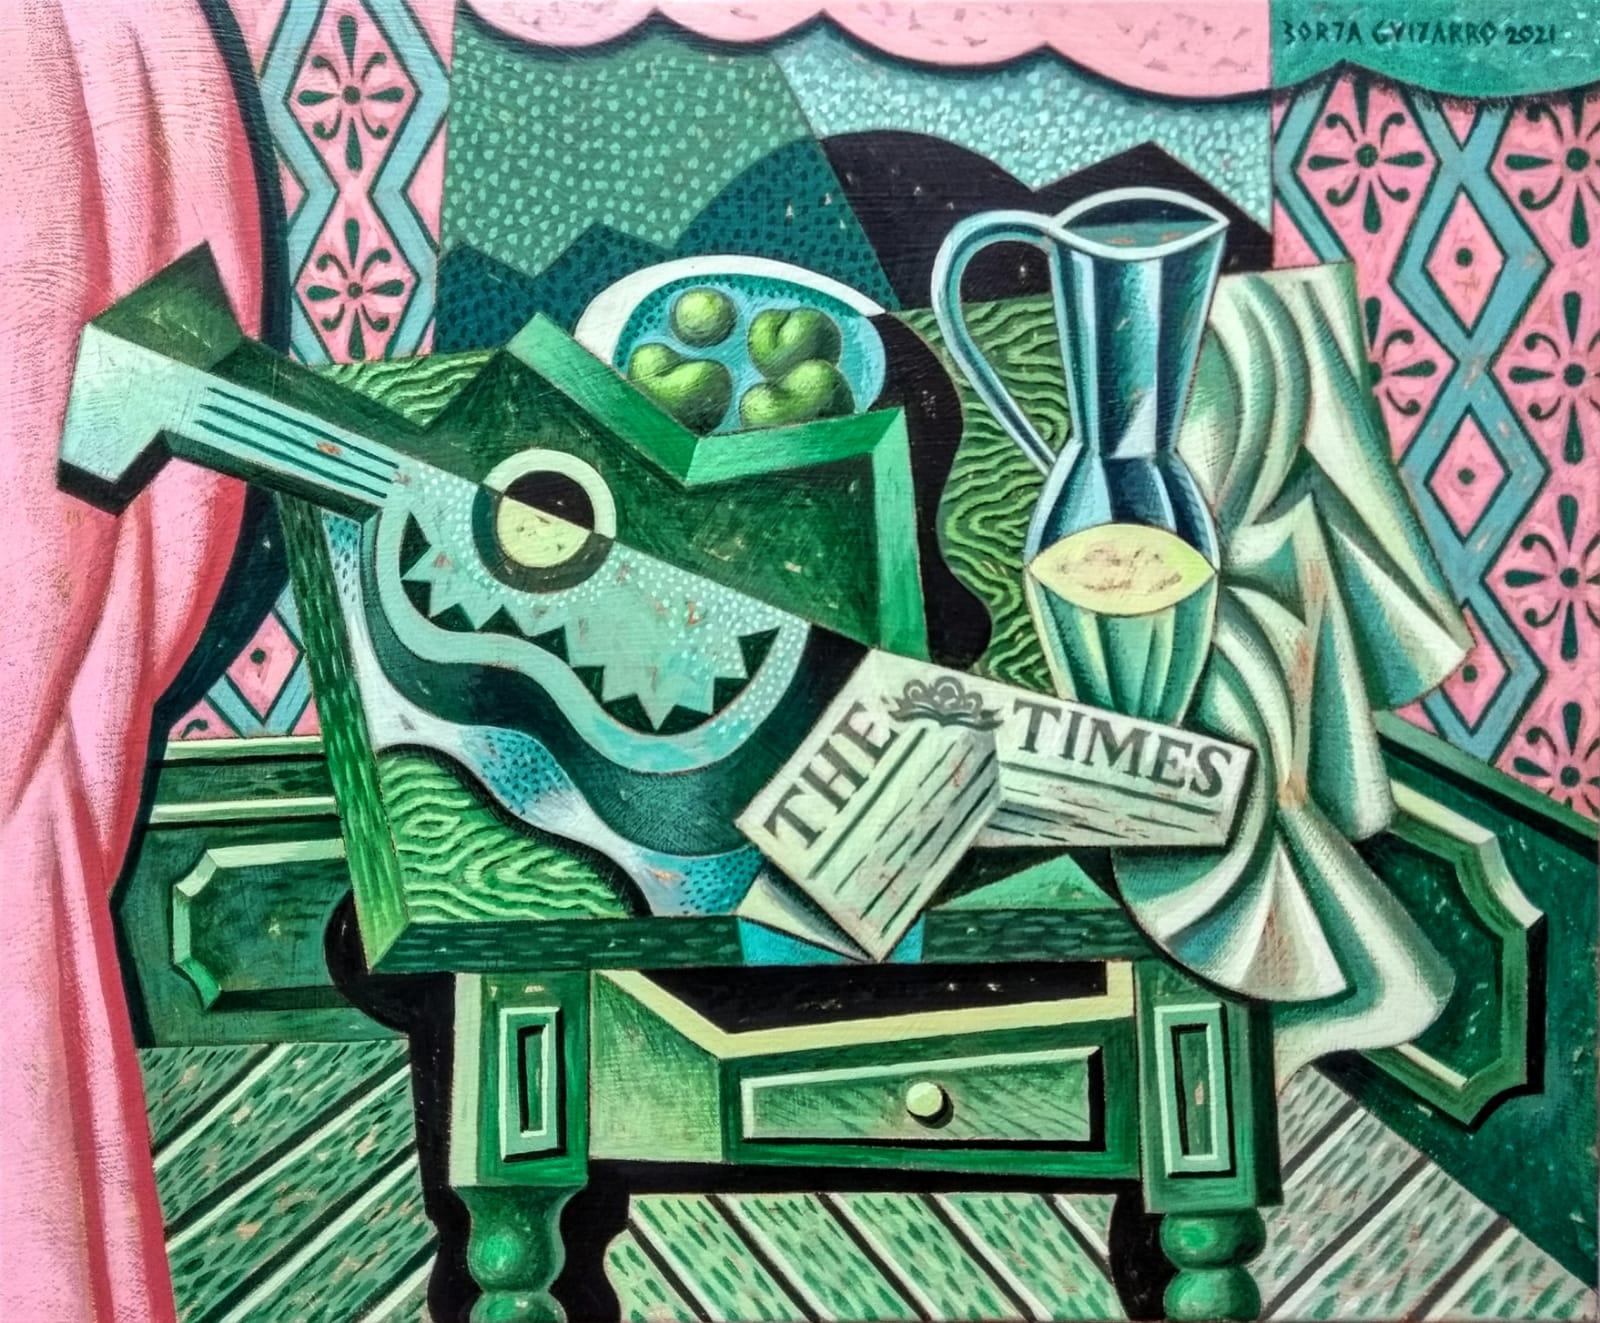 Borja Guijarro Abstract Painting - The Green Table - original still life modern abstract cubism artwork mixed media